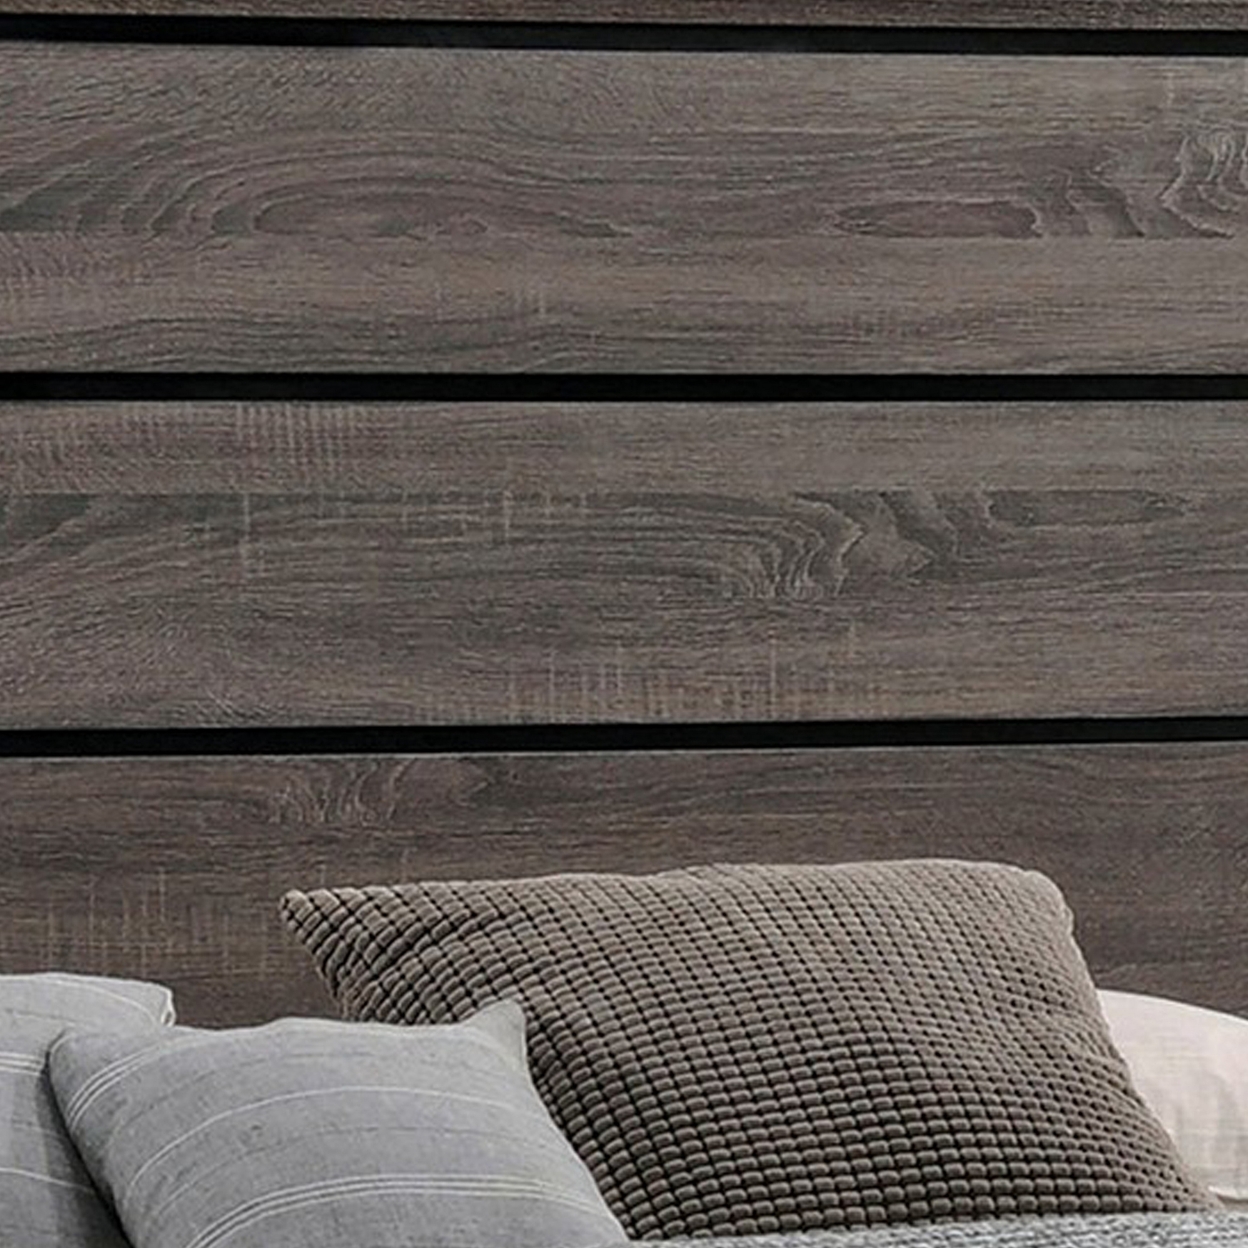 Mela California King Size Panel Bed, Grooved Design, Gray And Black- Saltoro Sherpi